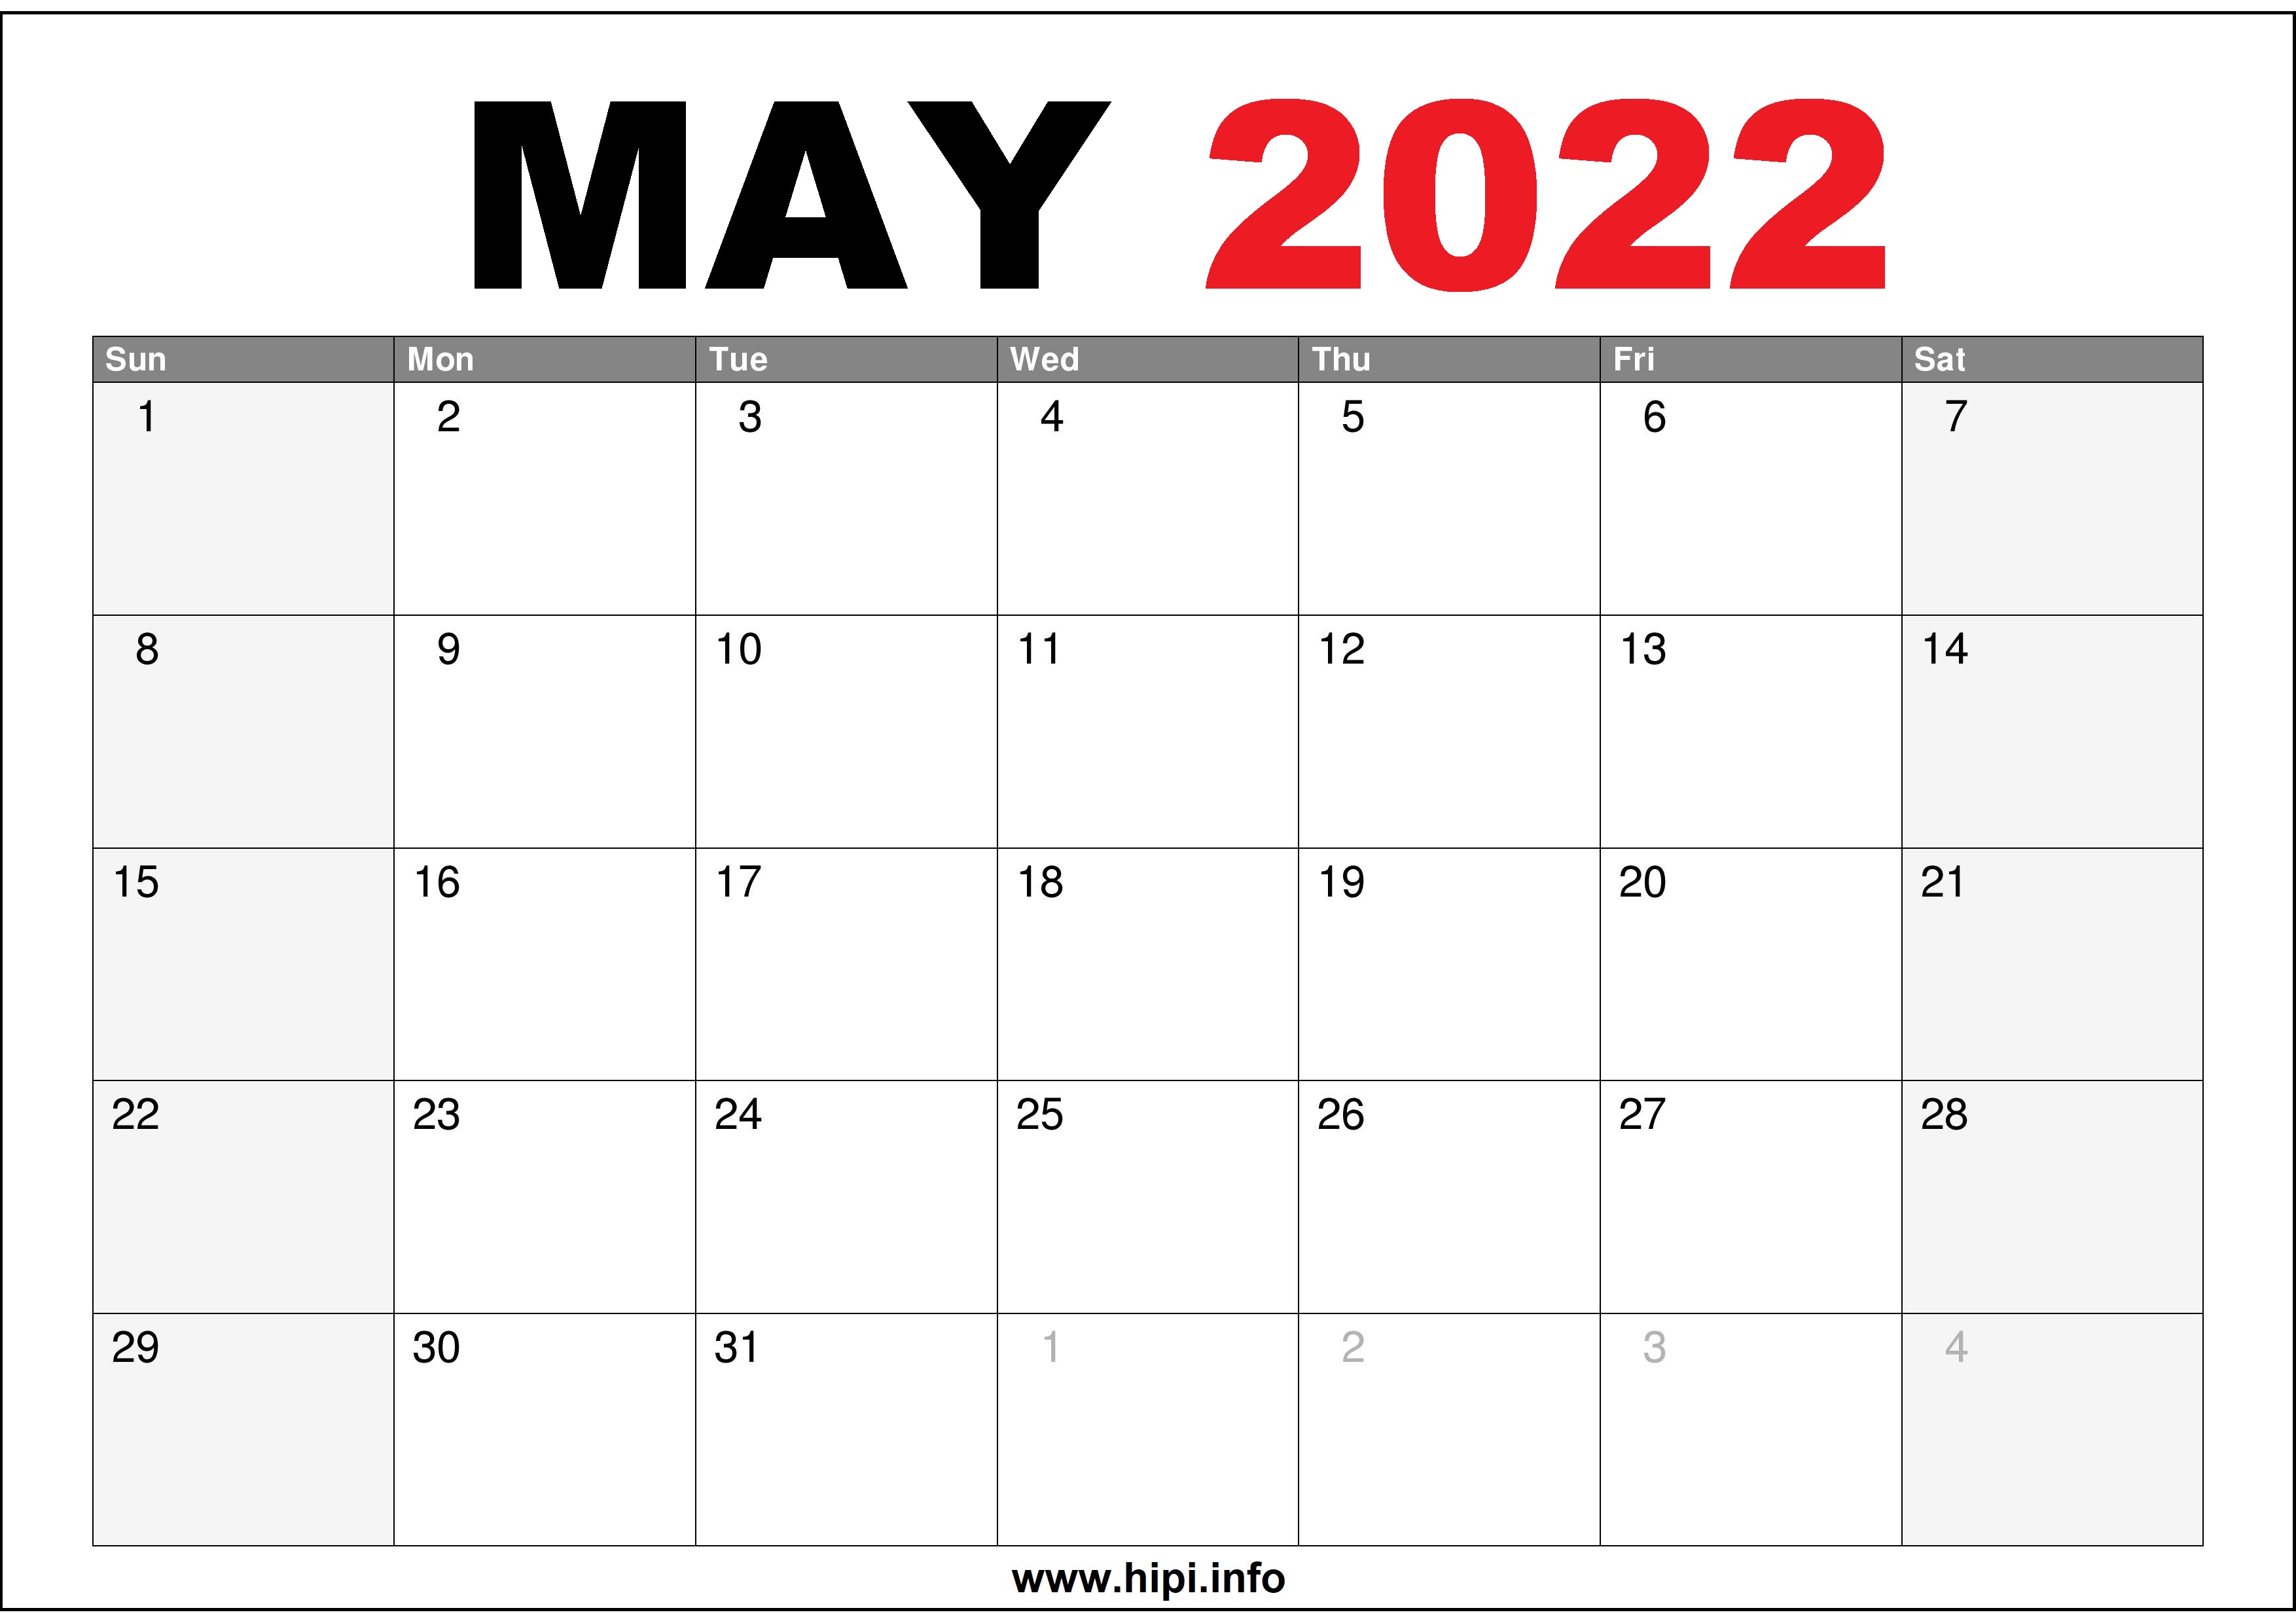 May 2022 Calendar Printable May 2022 Calendar Printable Us - Hipi.info | Calendars Printable Free